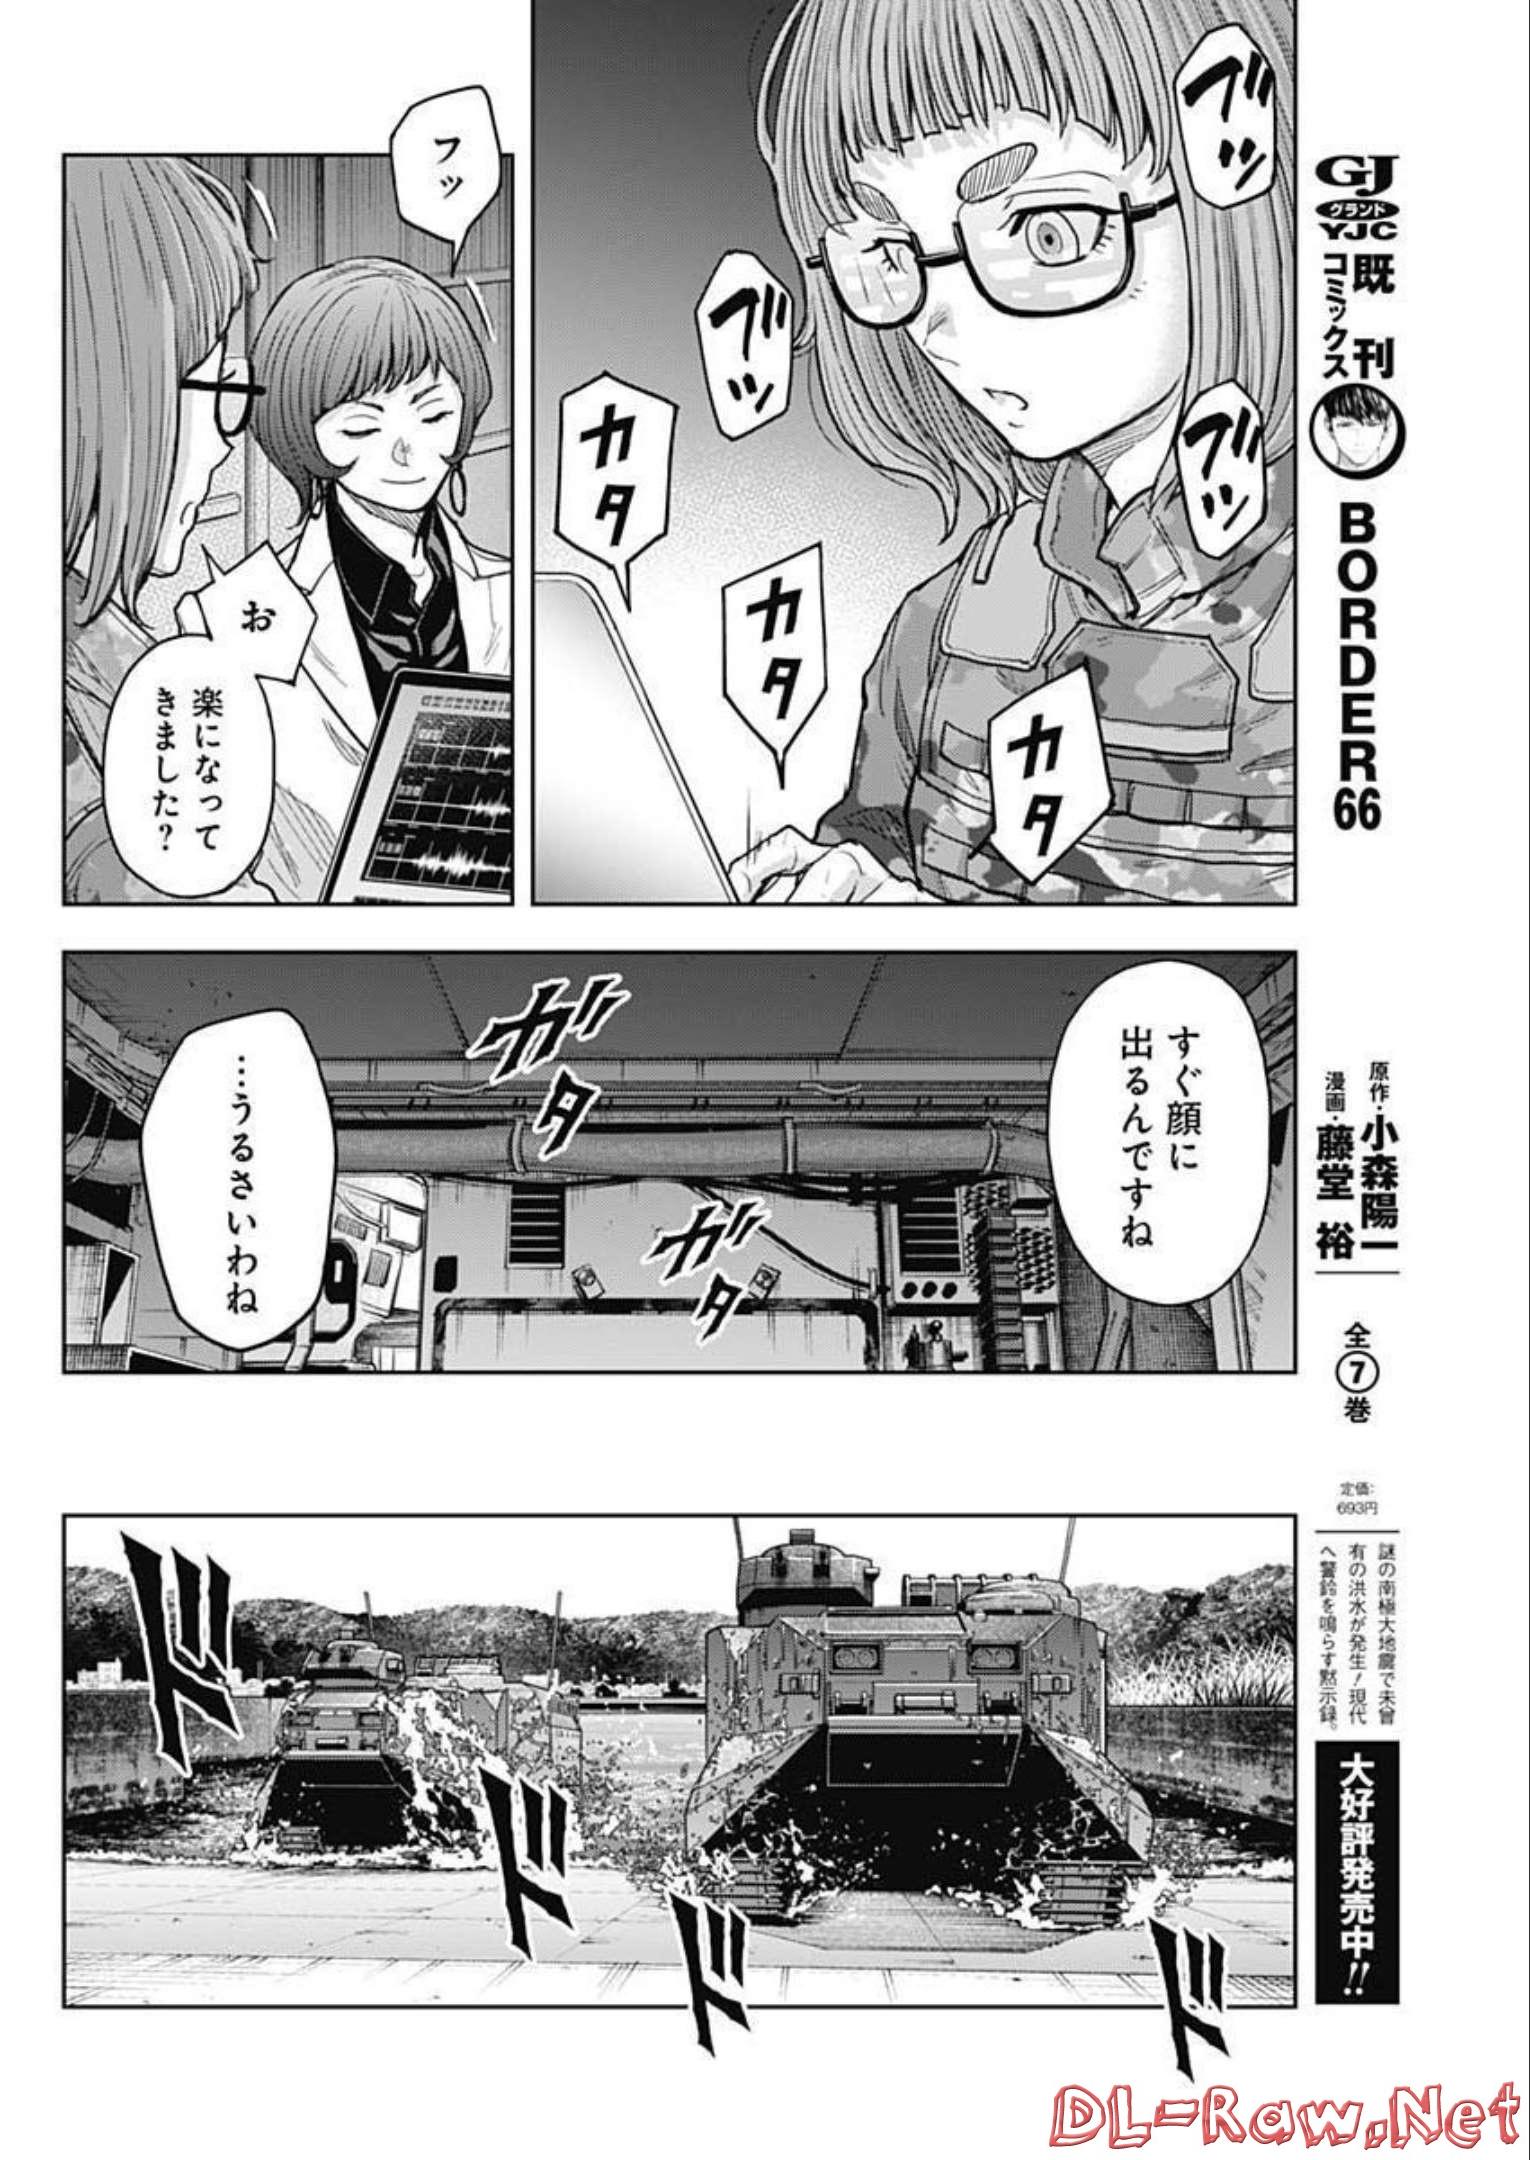 GIGANTISージャイガンティスー 第25話 - Page 8